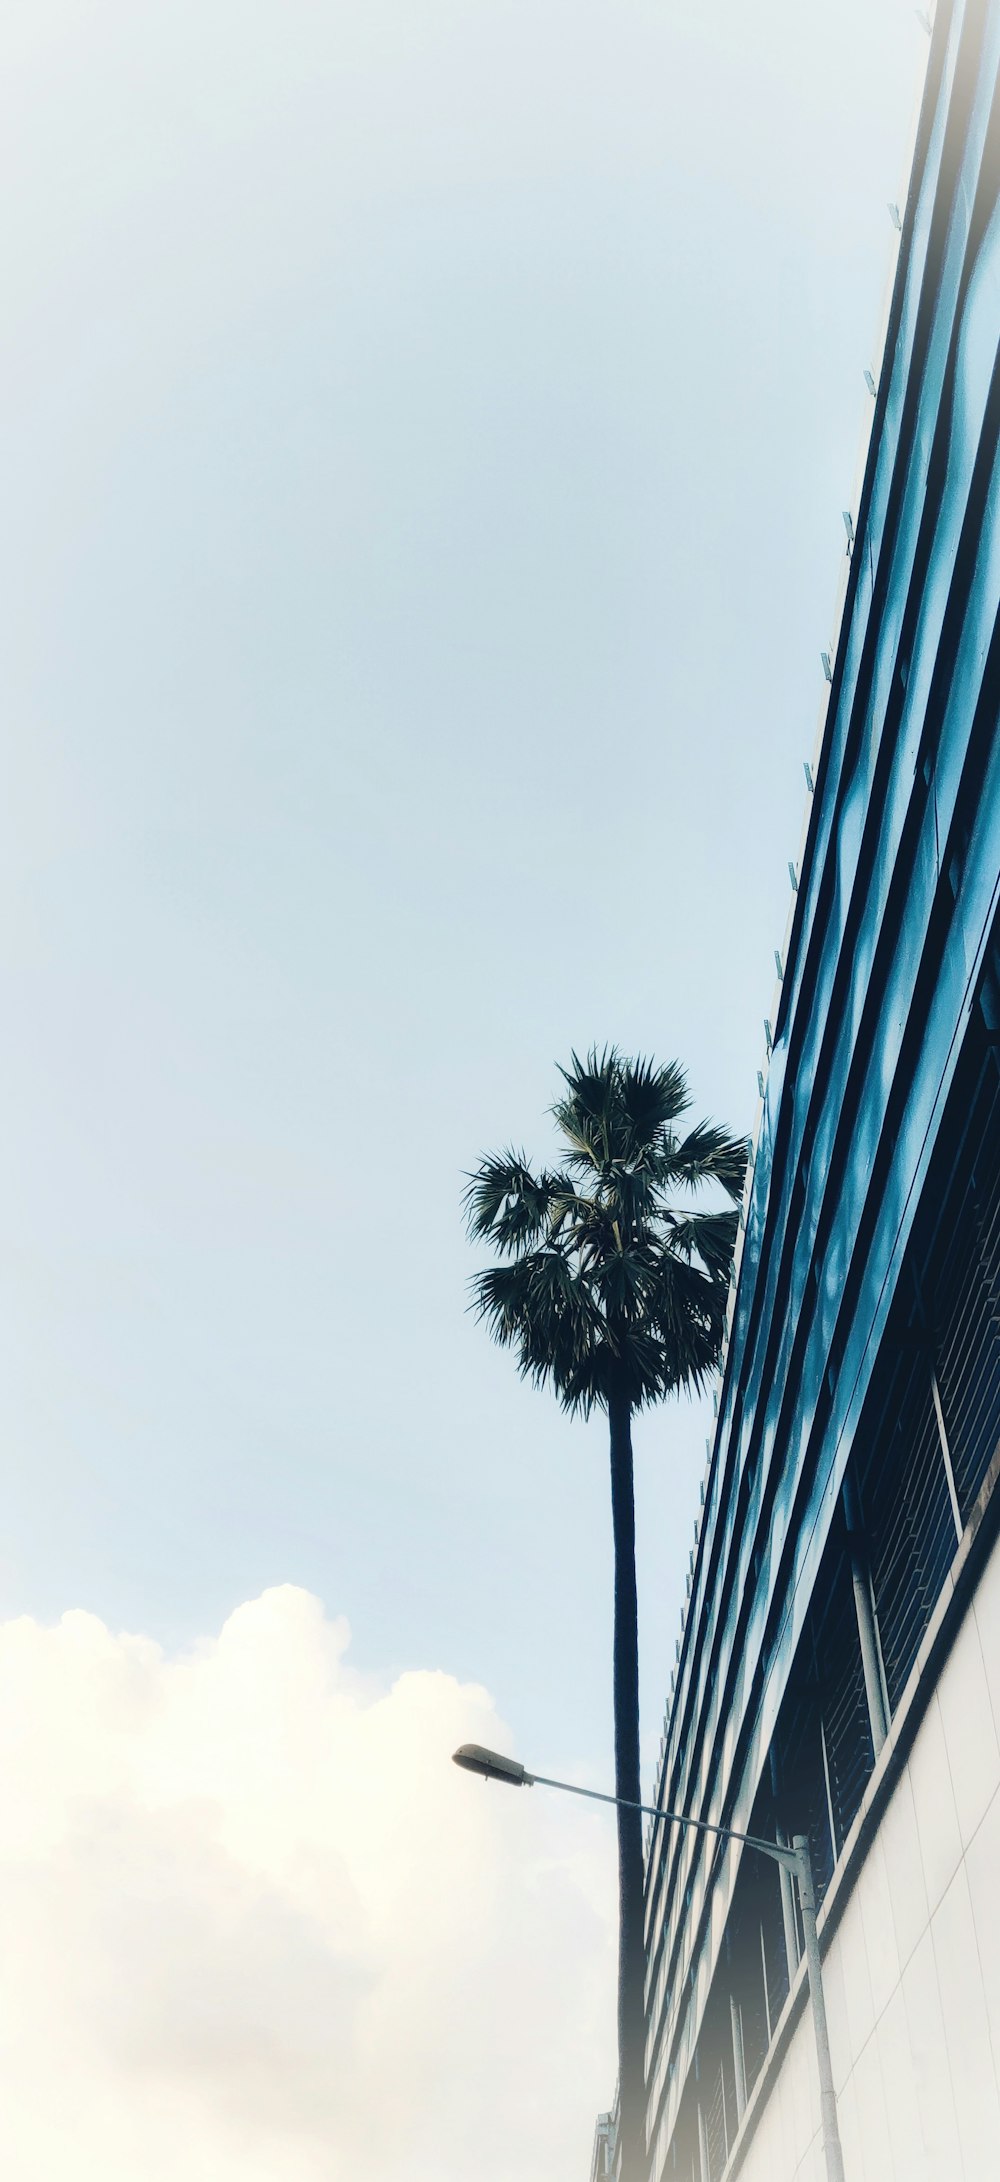 palm tree beside building